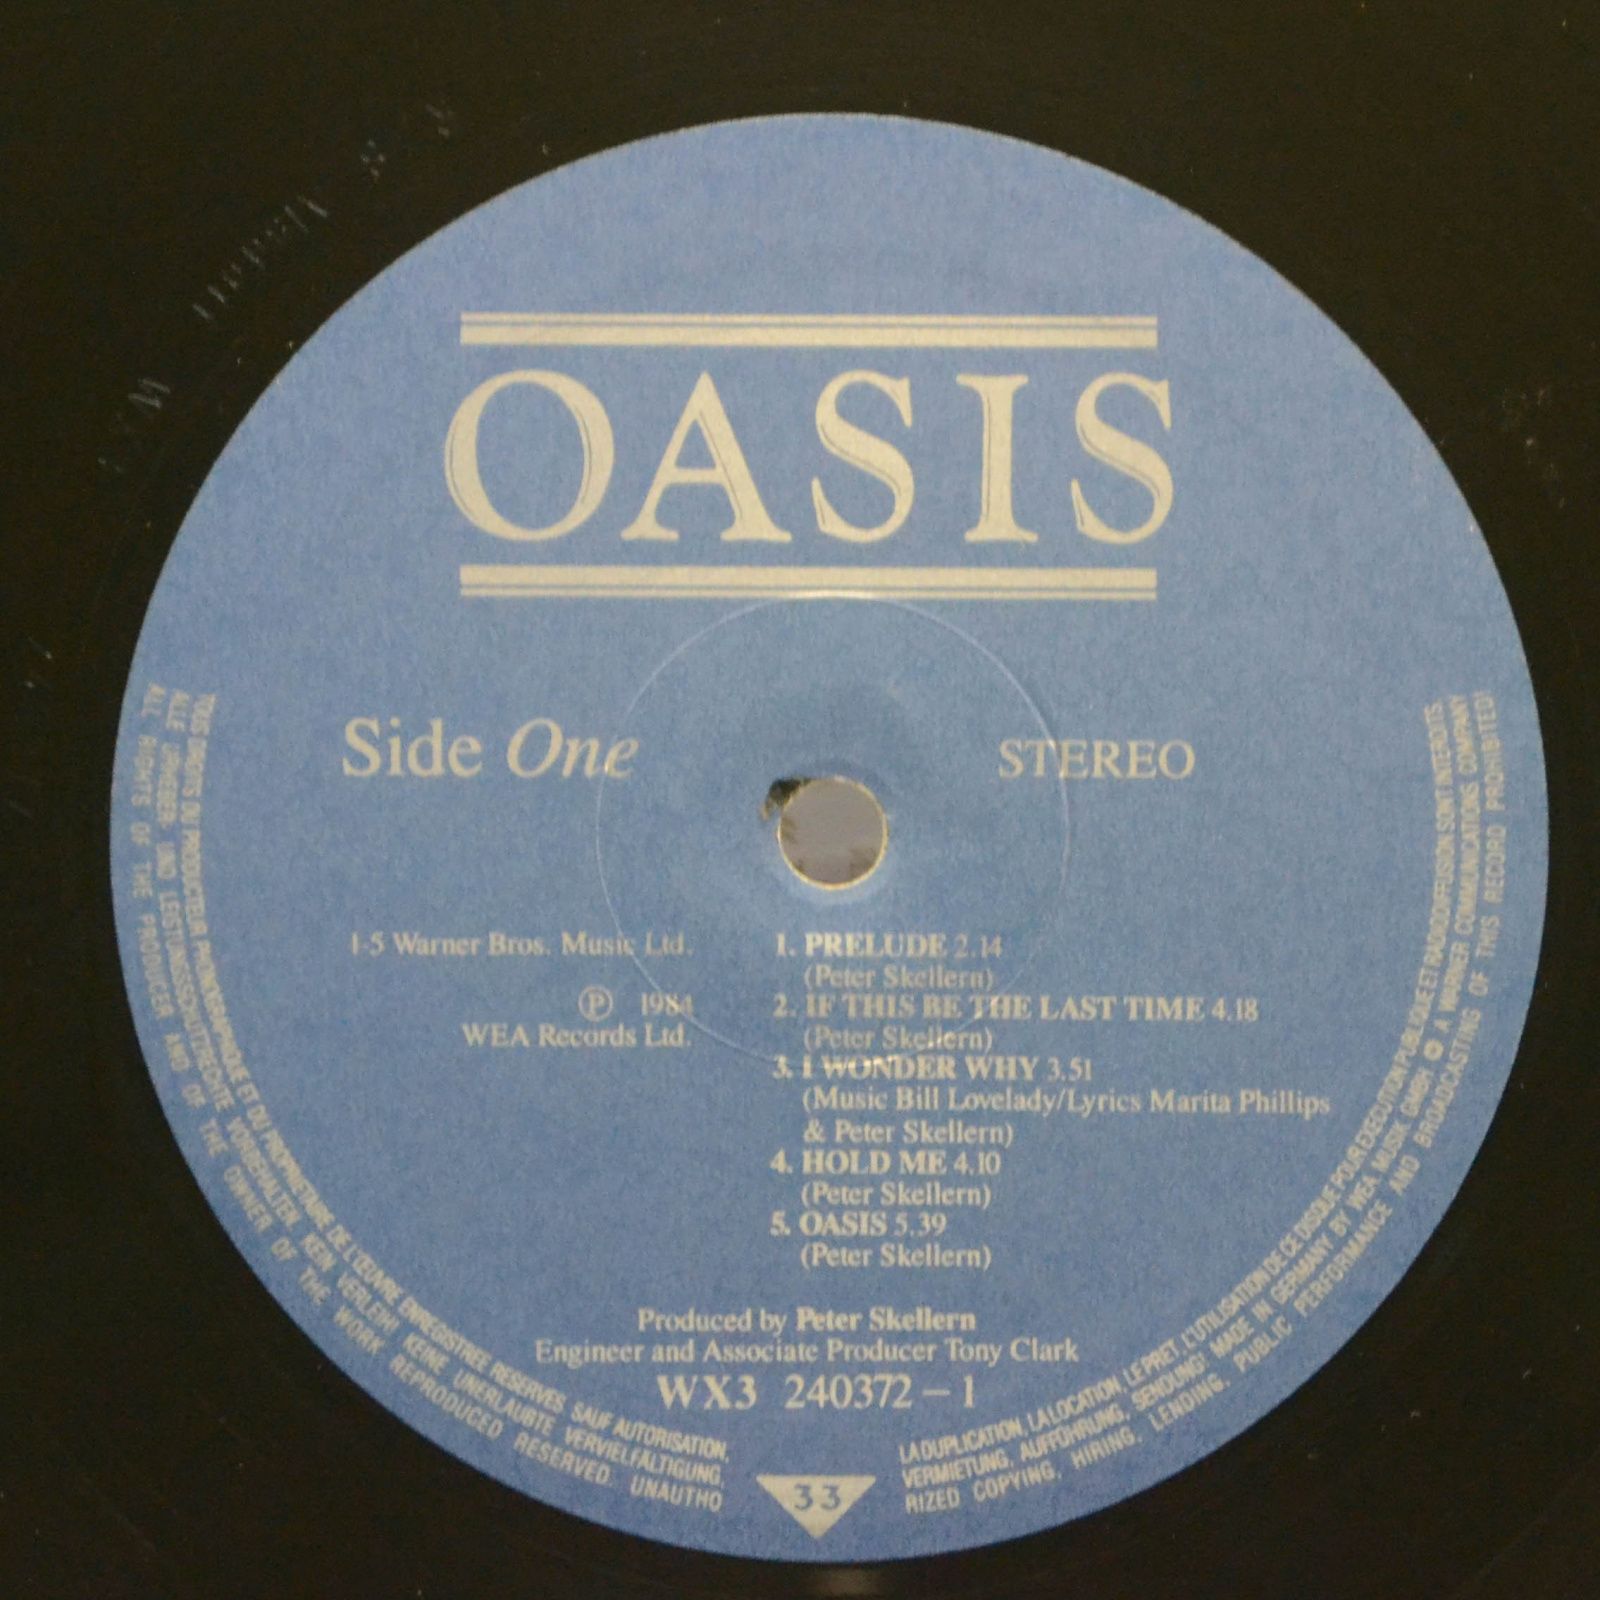 Oasis — Oasis, 1984